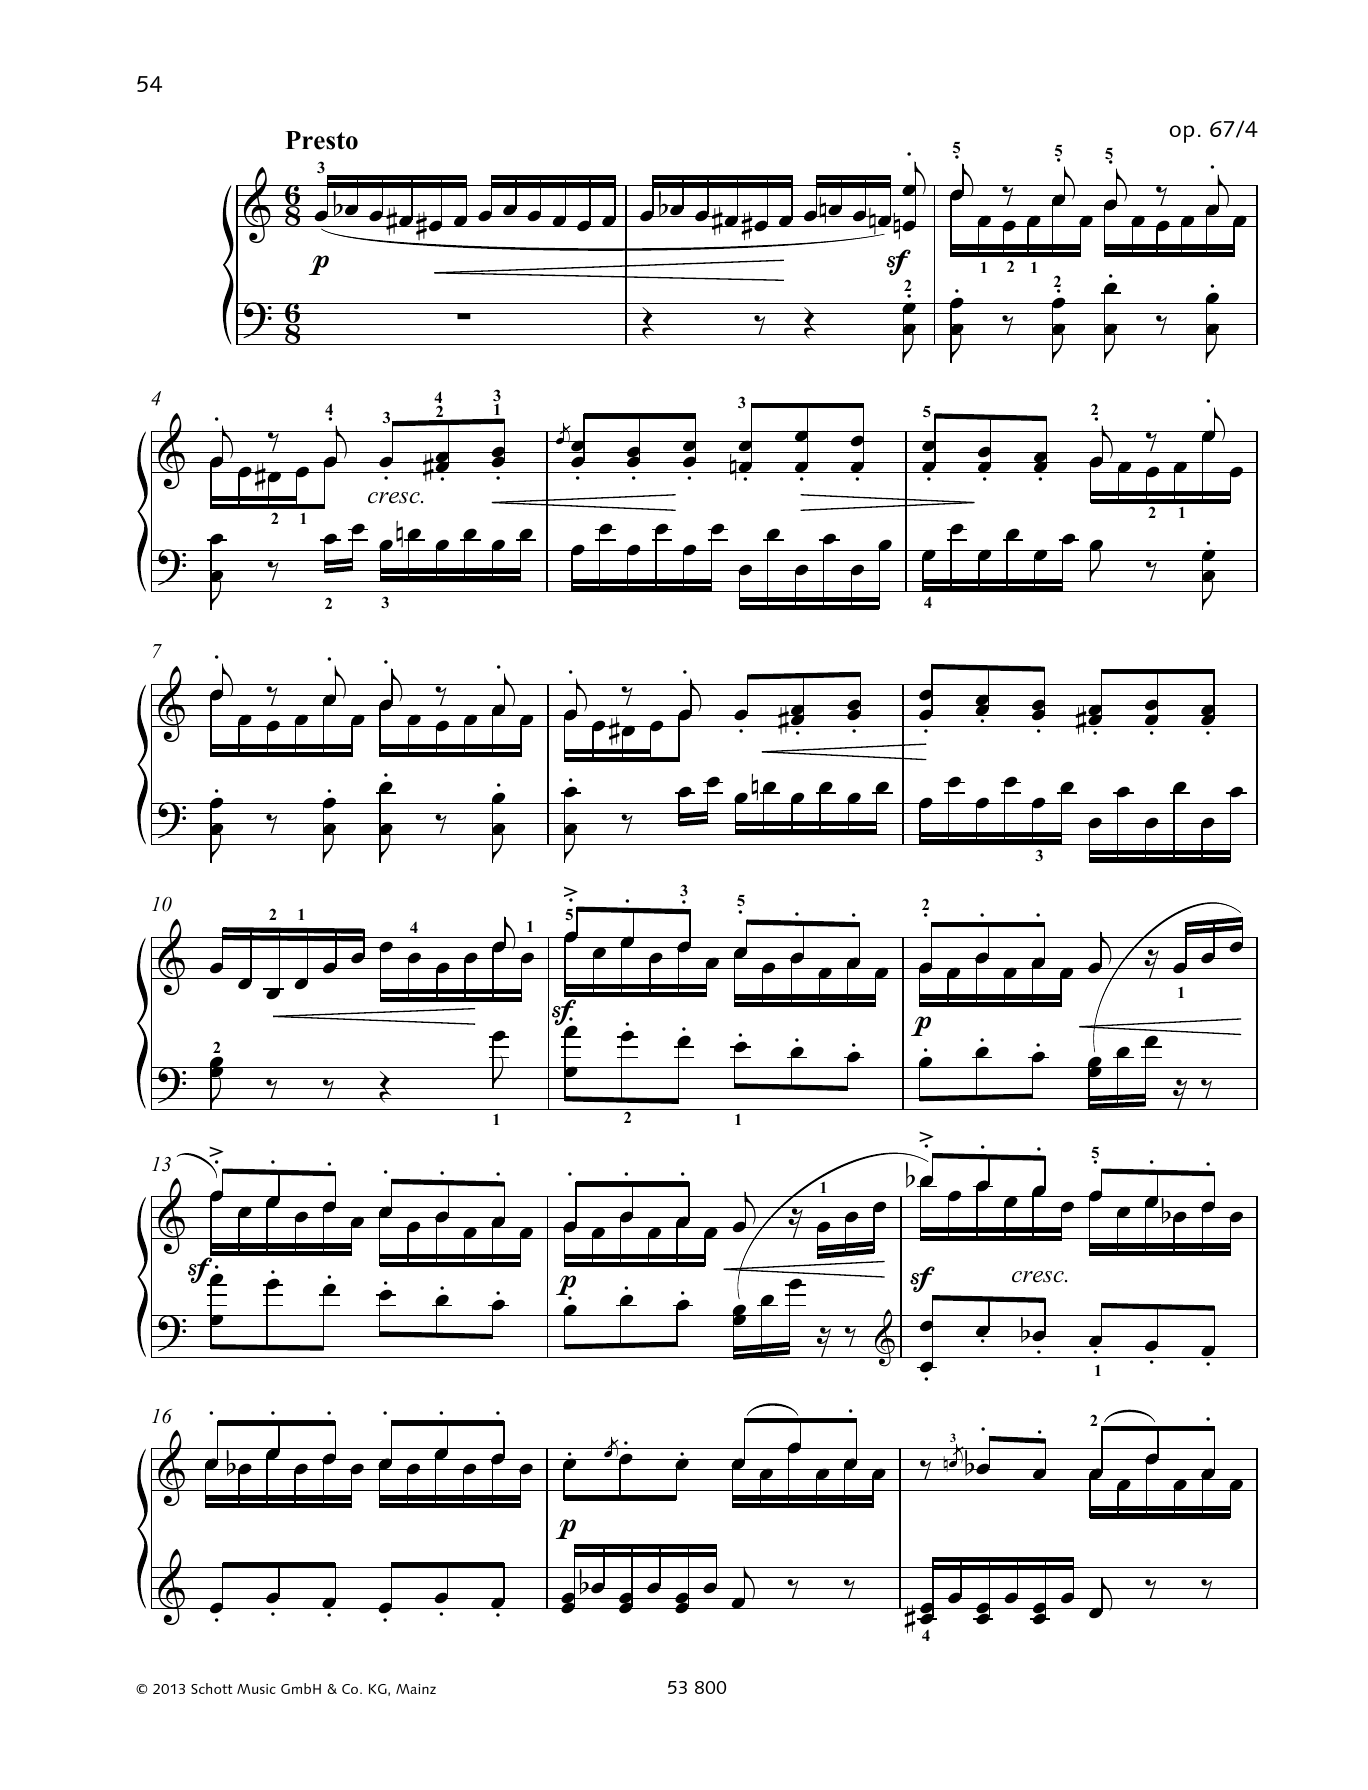 Felix Mendelssohn Bartholdy Presto Sheet Music Notes & Chords for Piano Solo - Download or Print PDF